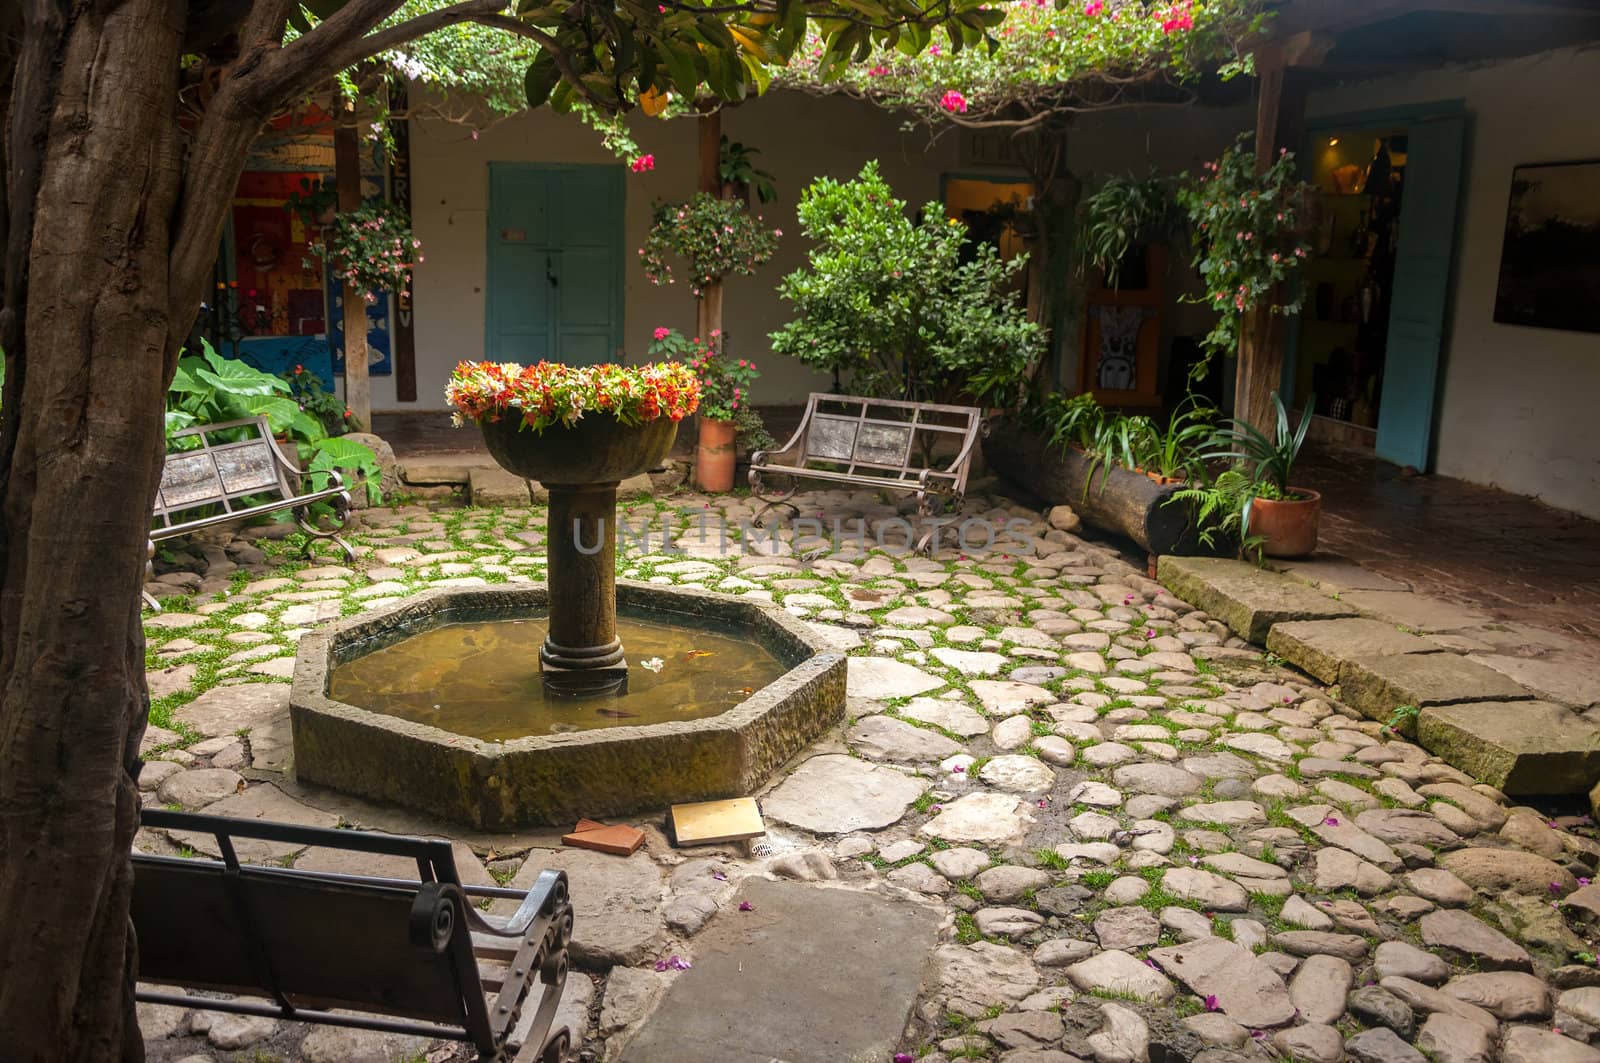 Beautiful old fountain in a colonial courtyard in Villa de Leyva, Colombia